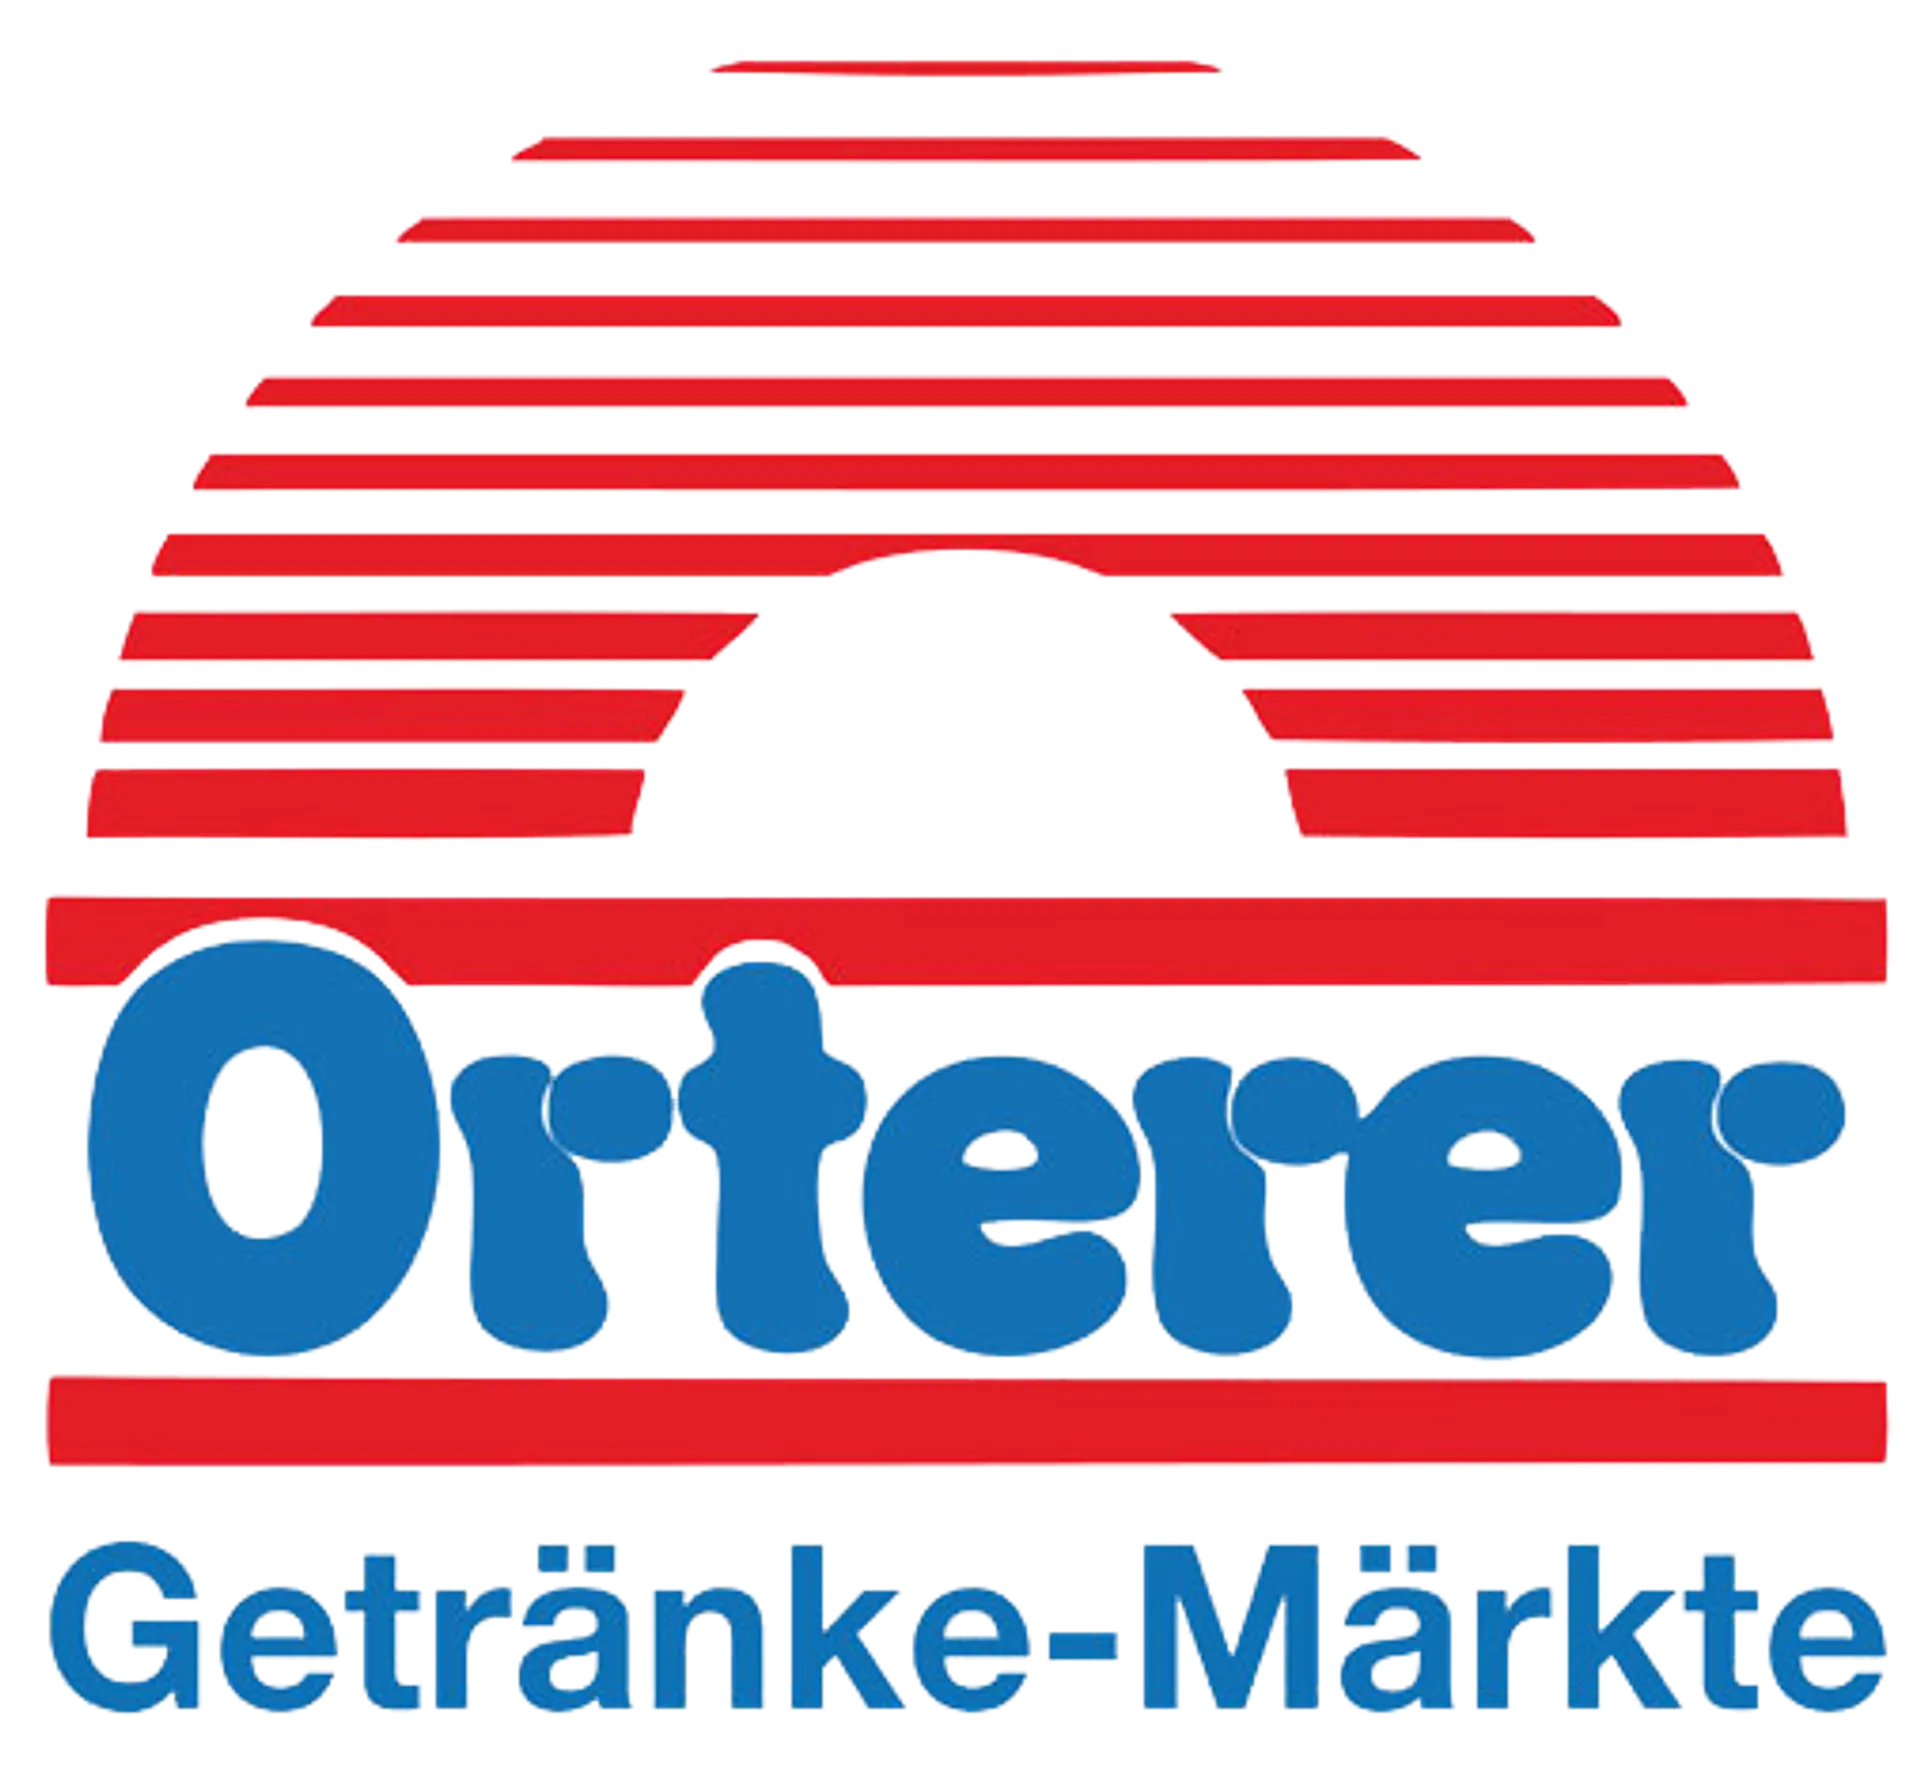  ORTERER GETRÄNKEMARKT logo